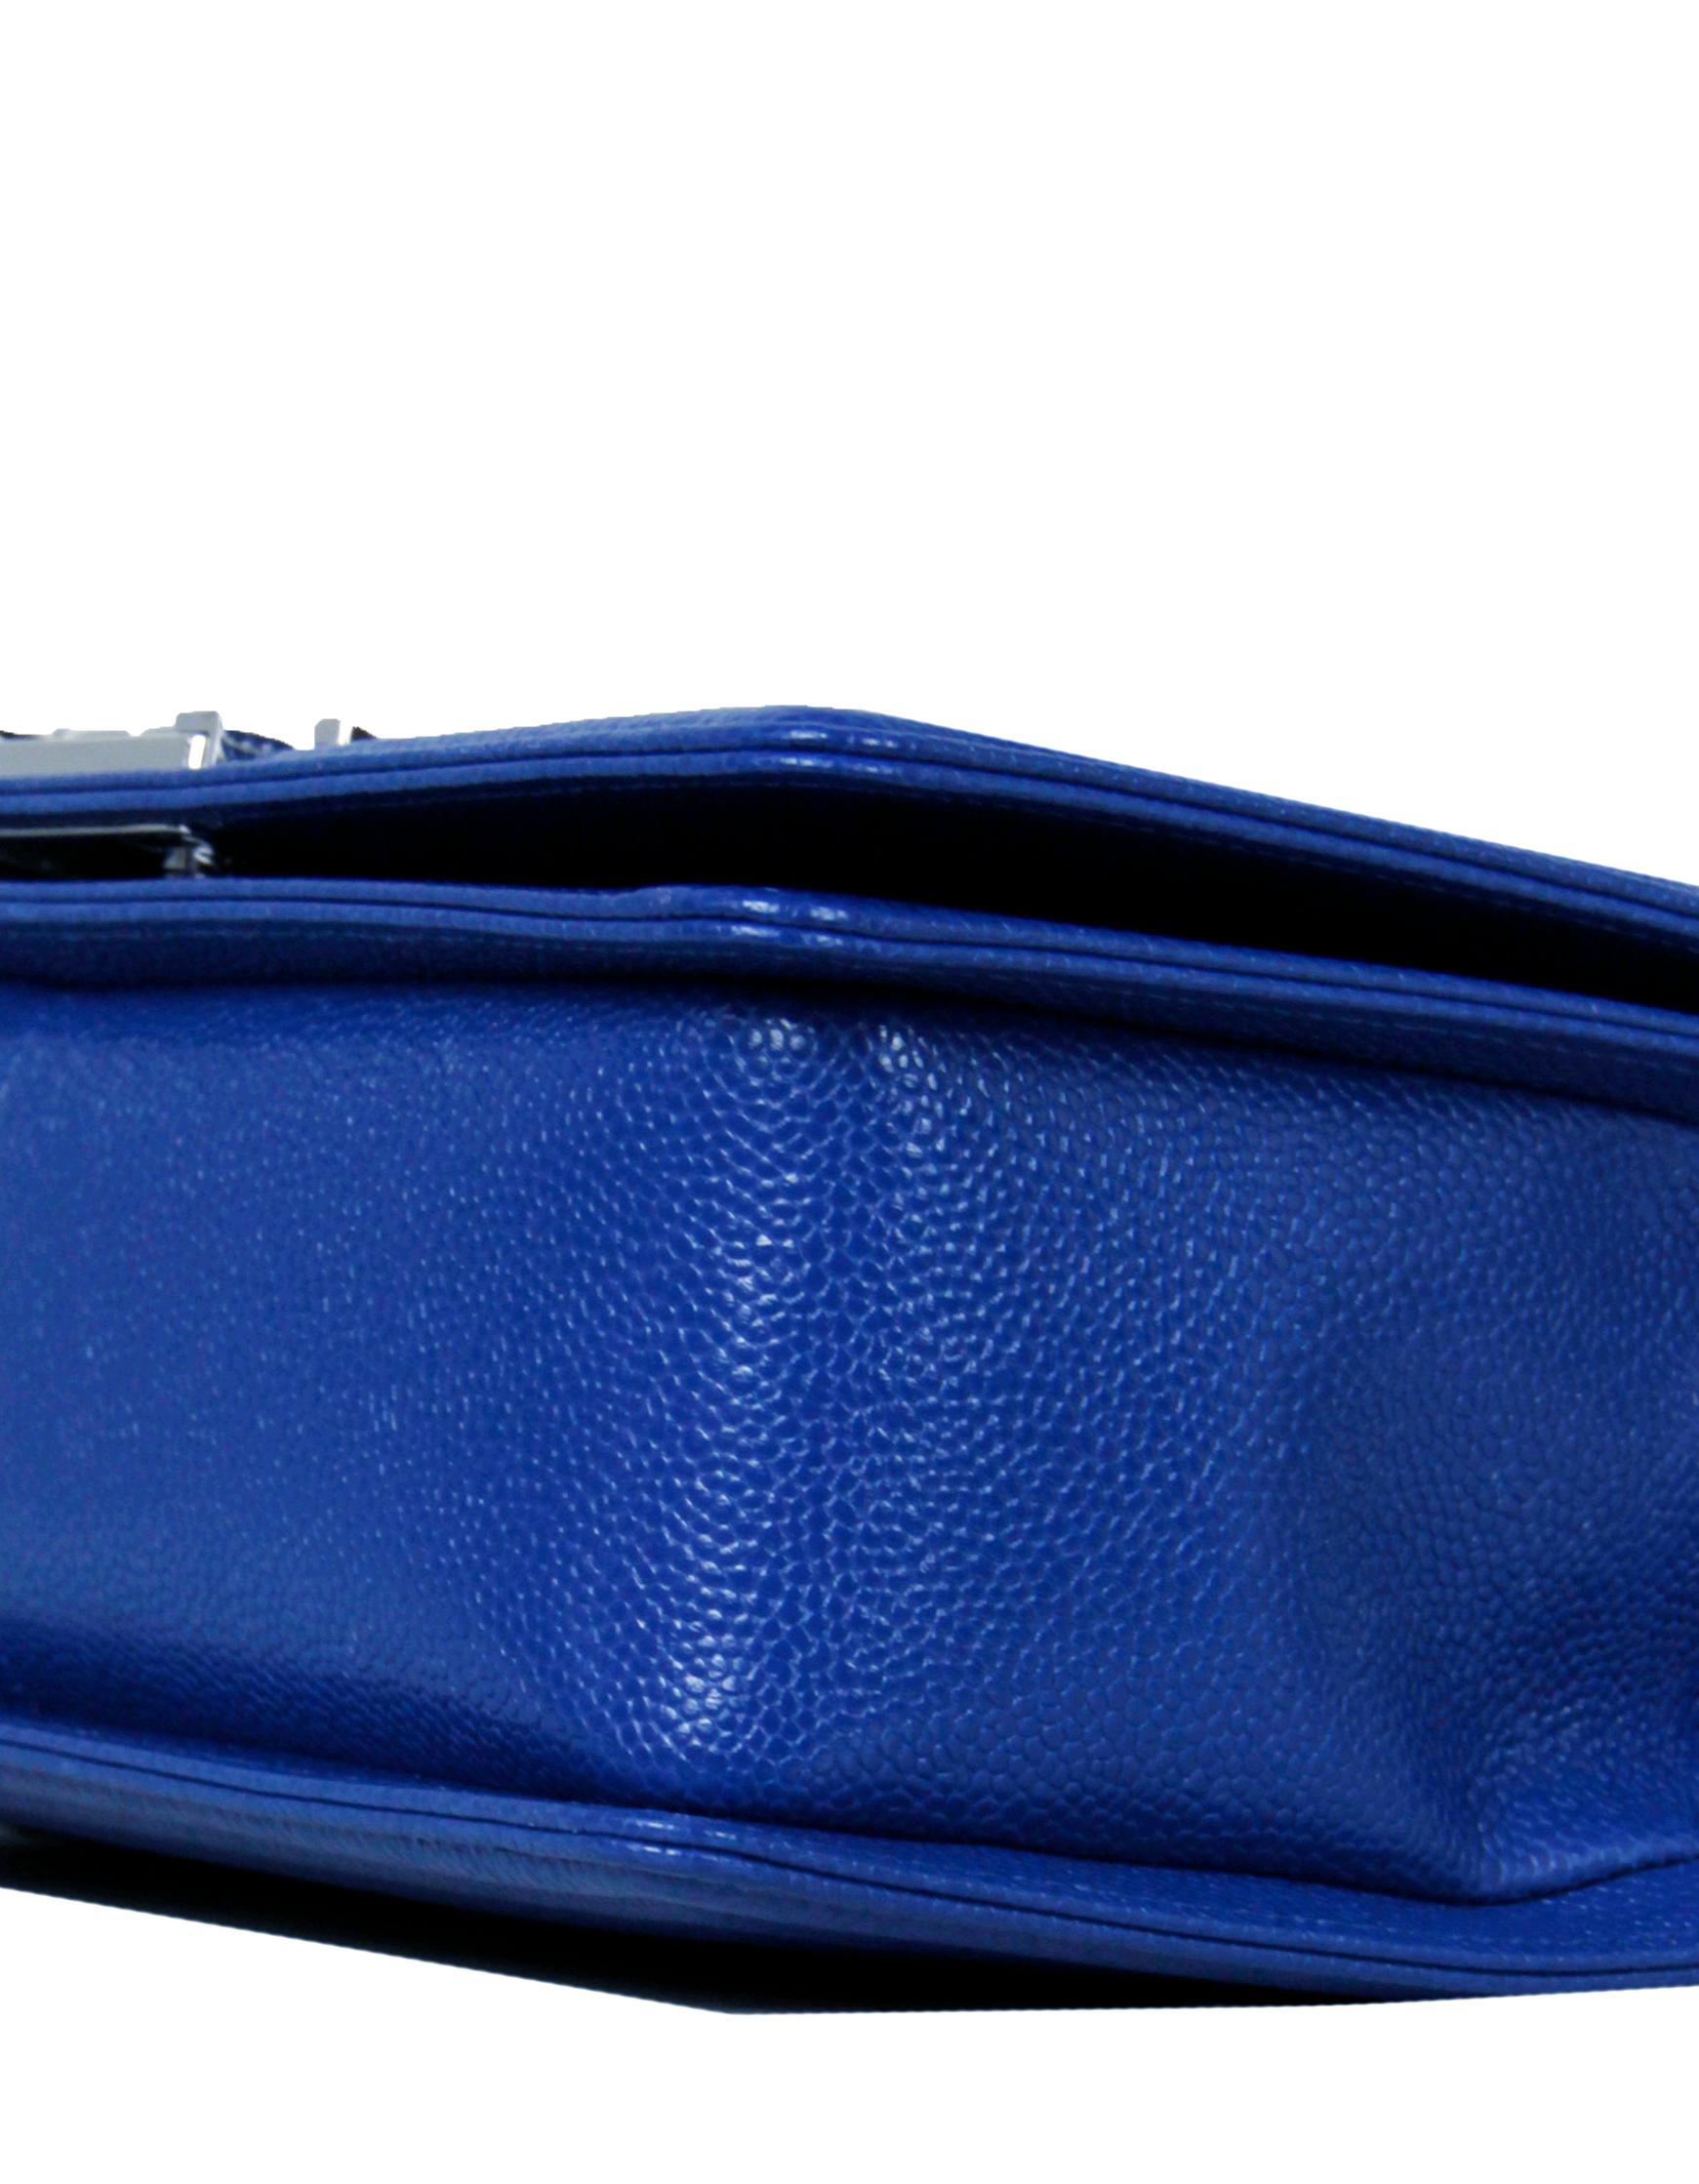 blue luxury bag